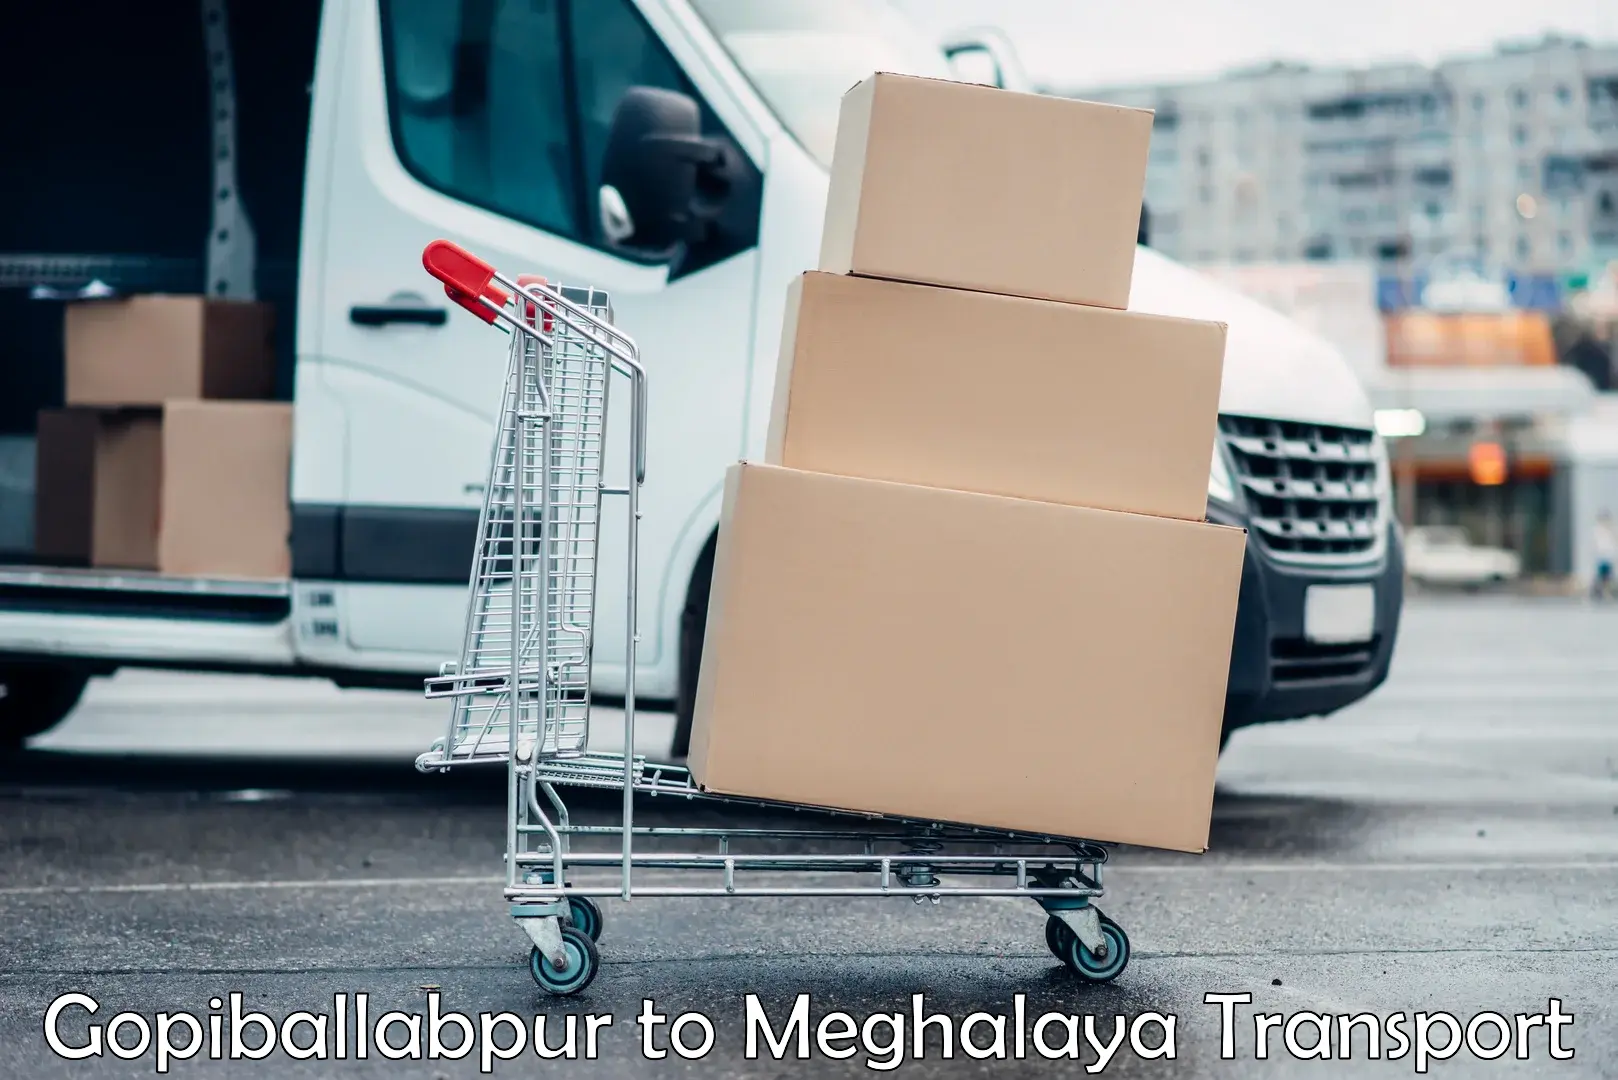 Goods delivery service Gopiballabpur to Phulbari